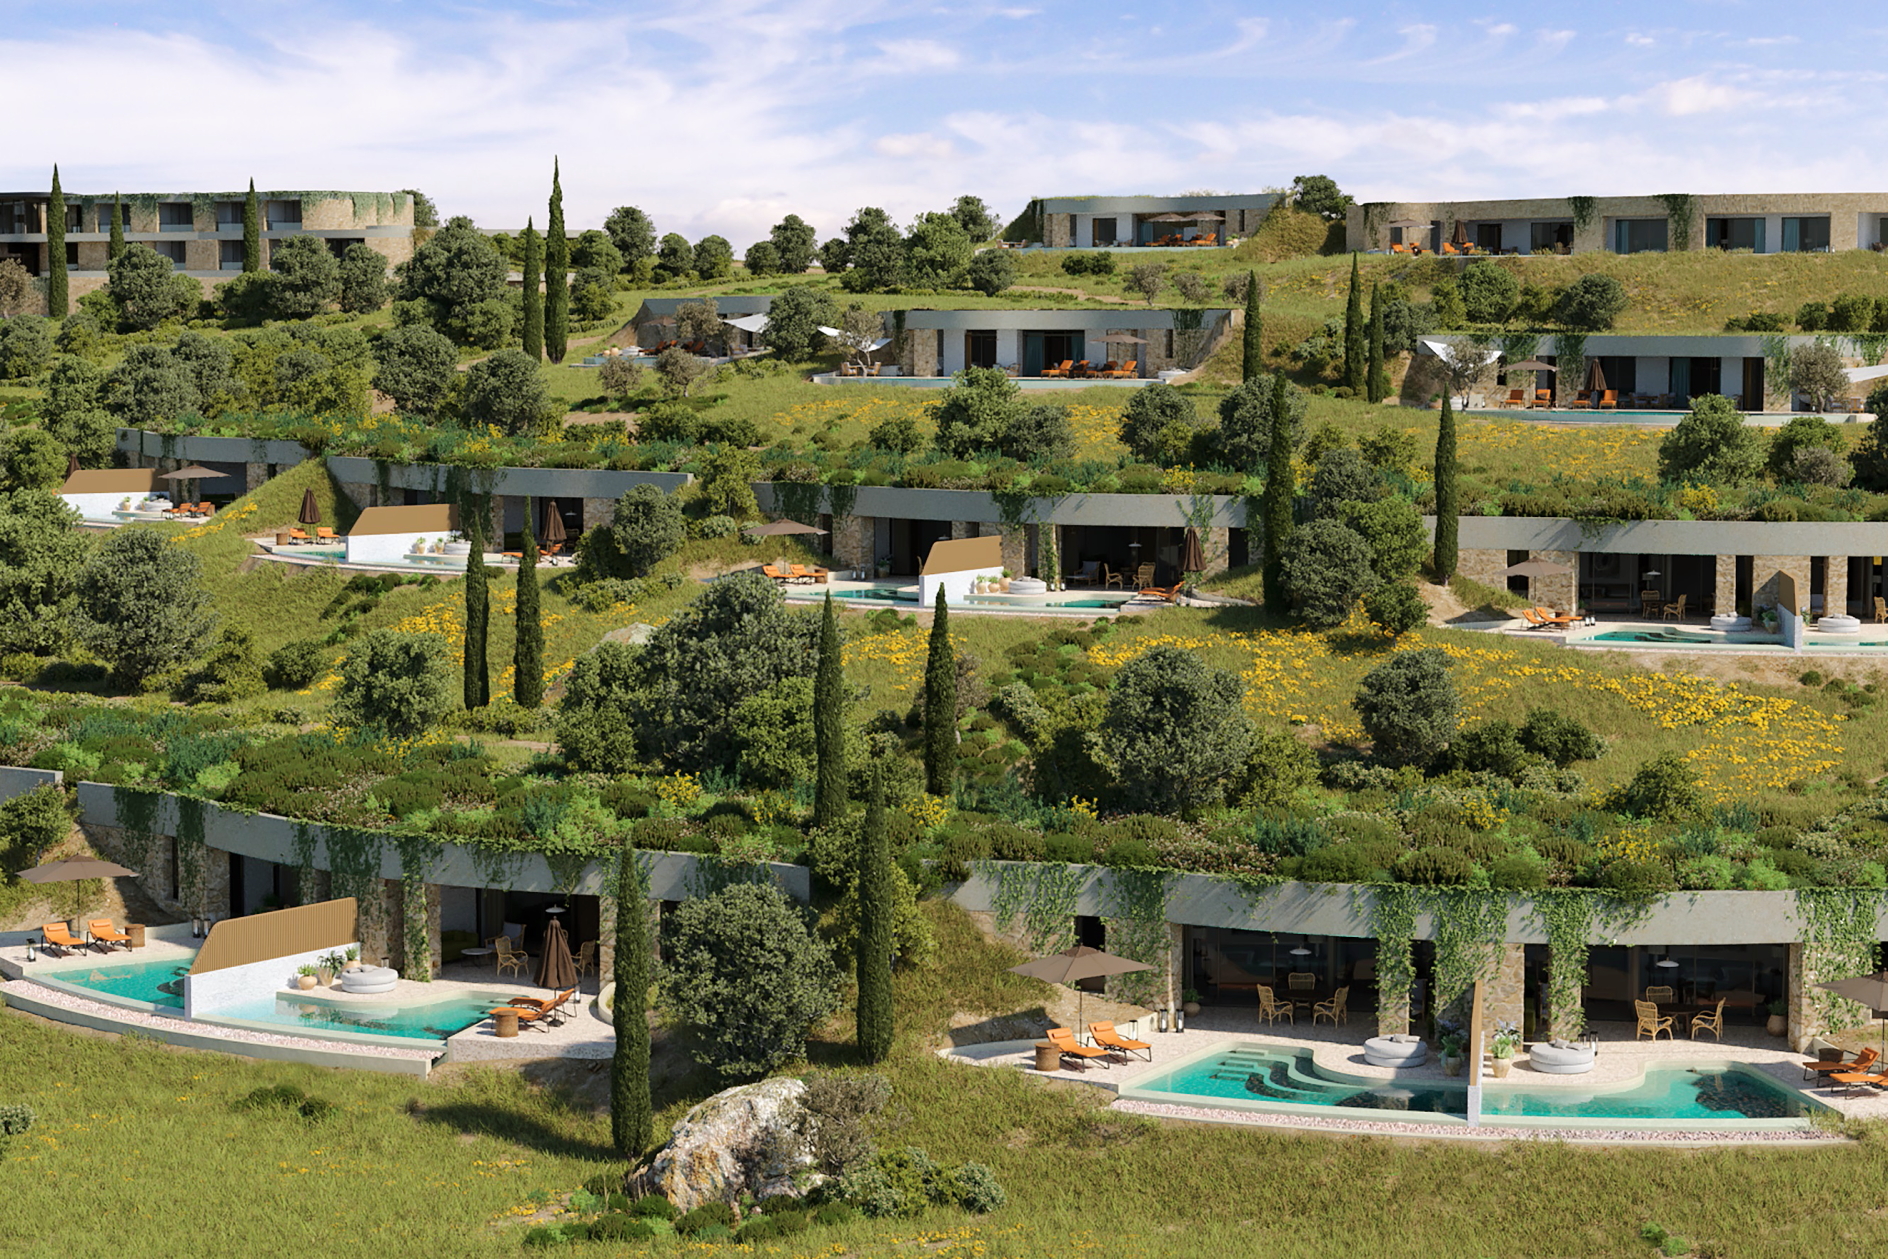 Pool Villas at the Mandarin Oriental, Costa Navarino in Greece. Click to enlarge.